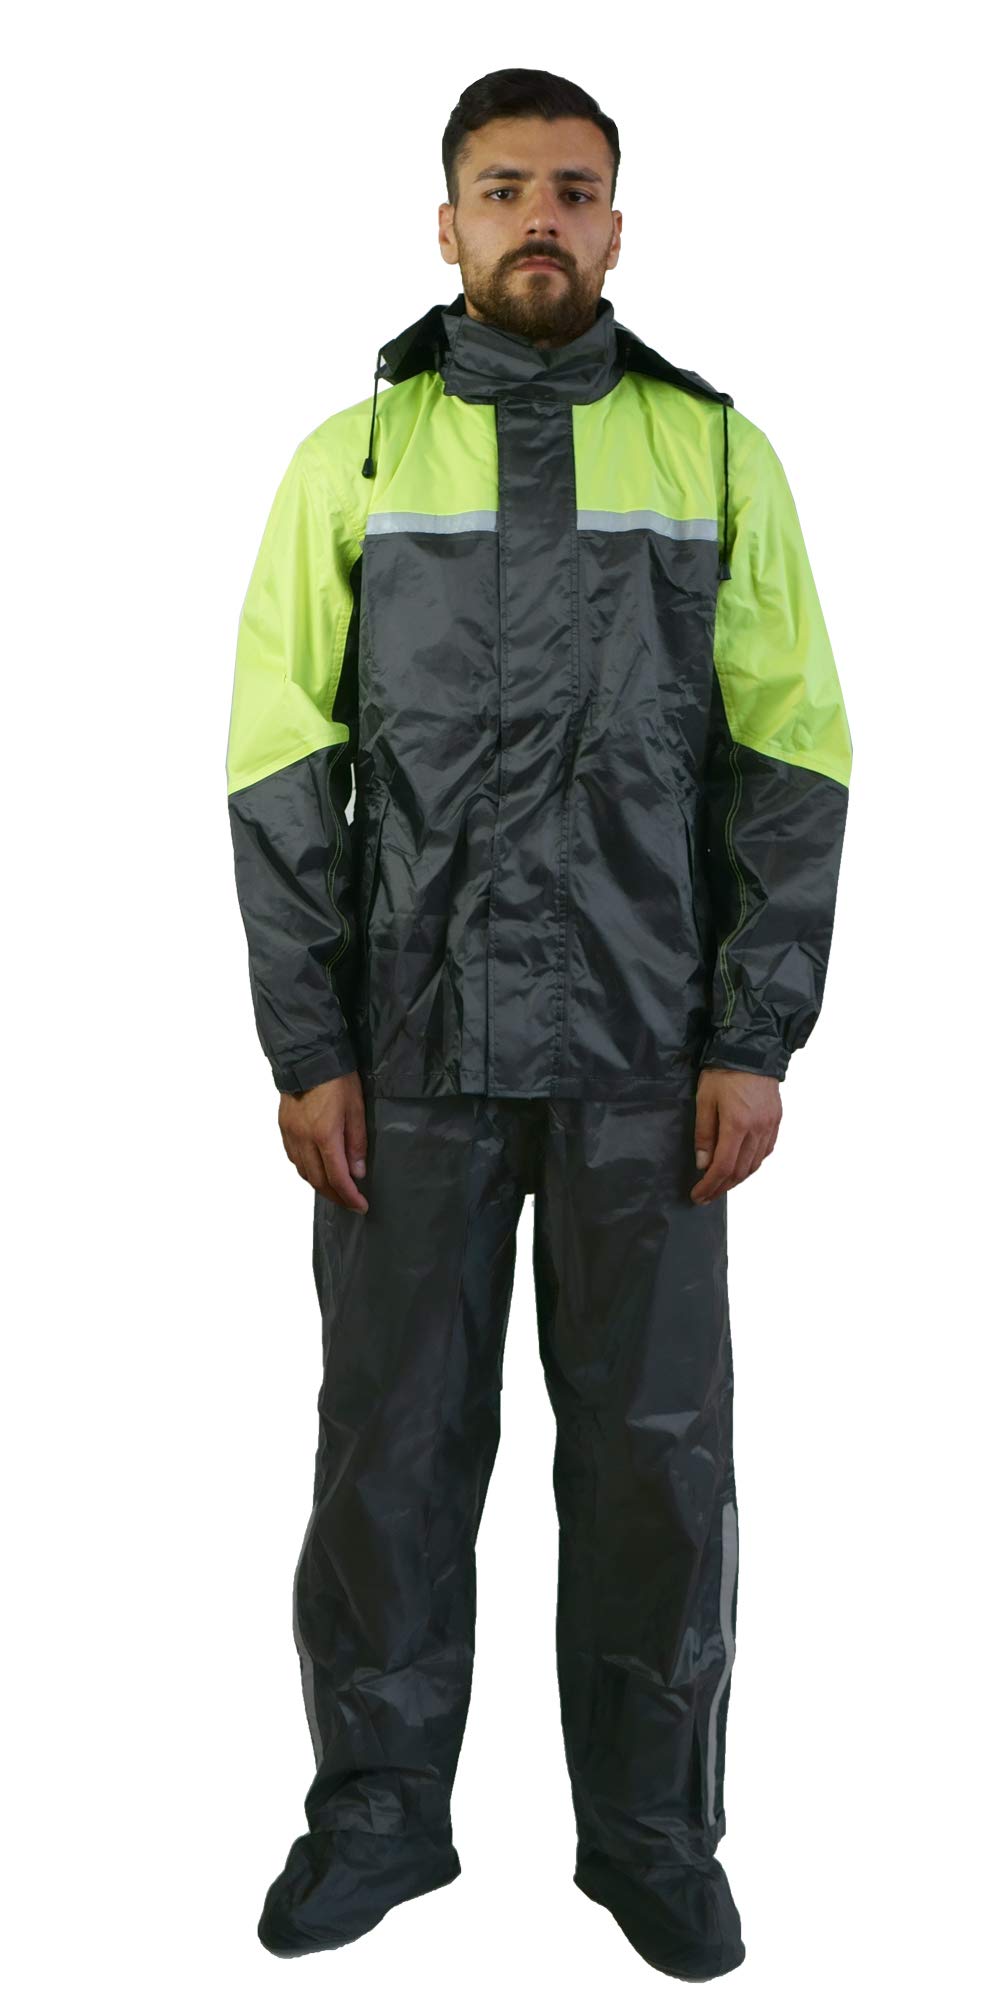 TJ MARVIN Regenschutz Set (Jacke, Hose, Stiefelbezug und Rucksäcke) CLASSICO E31 XS Nero Giallo fluo von TJ MARVIN